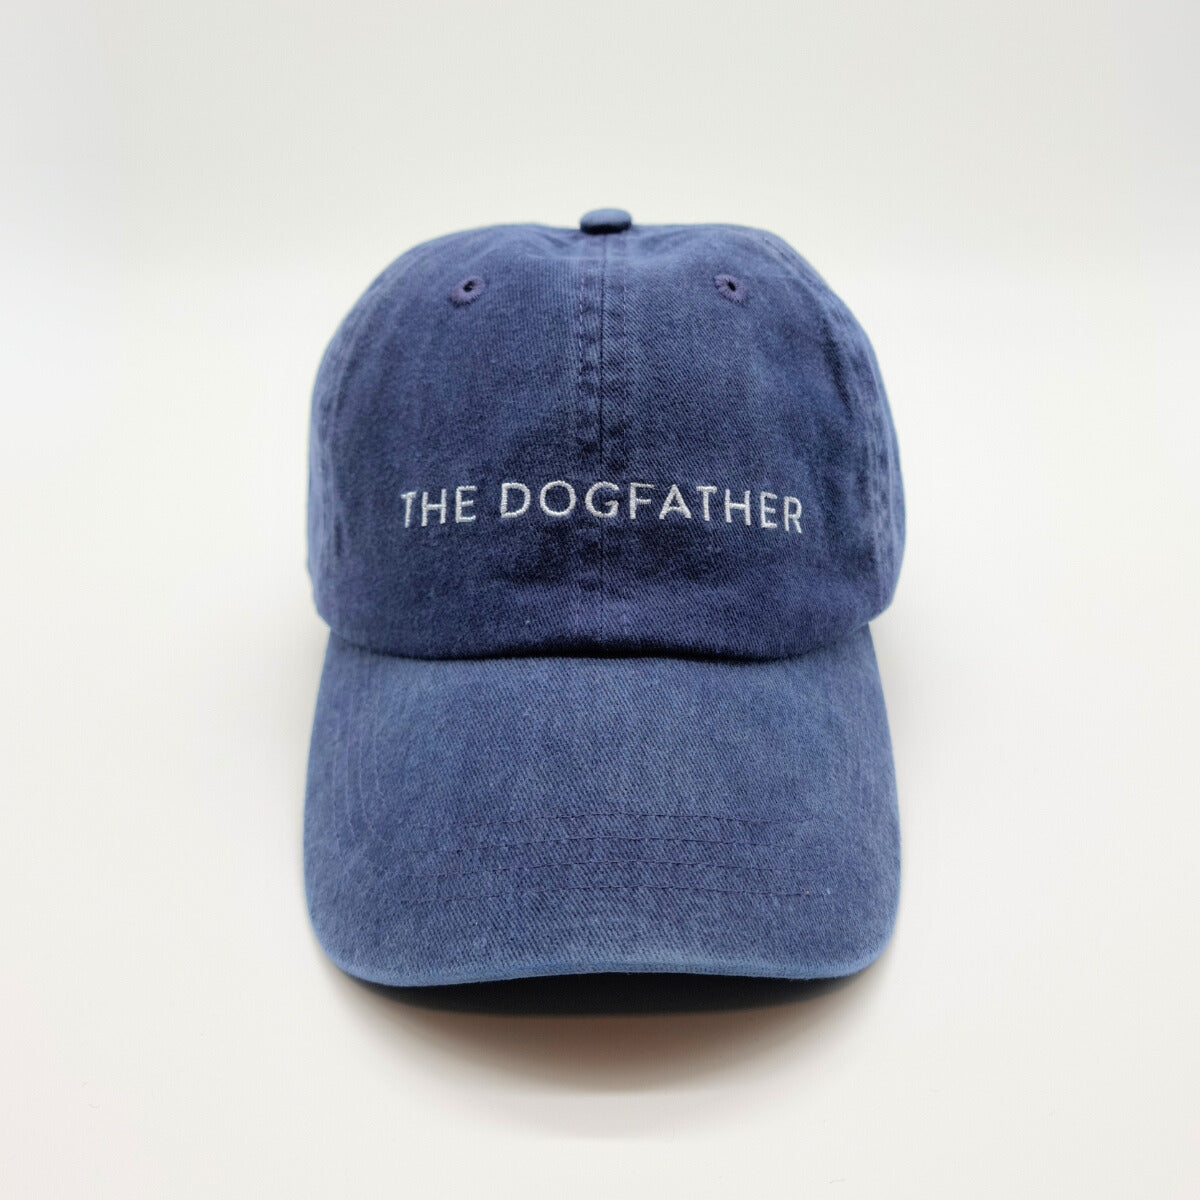 dark-blue-denim-cap-the-dogfather-front.jpg